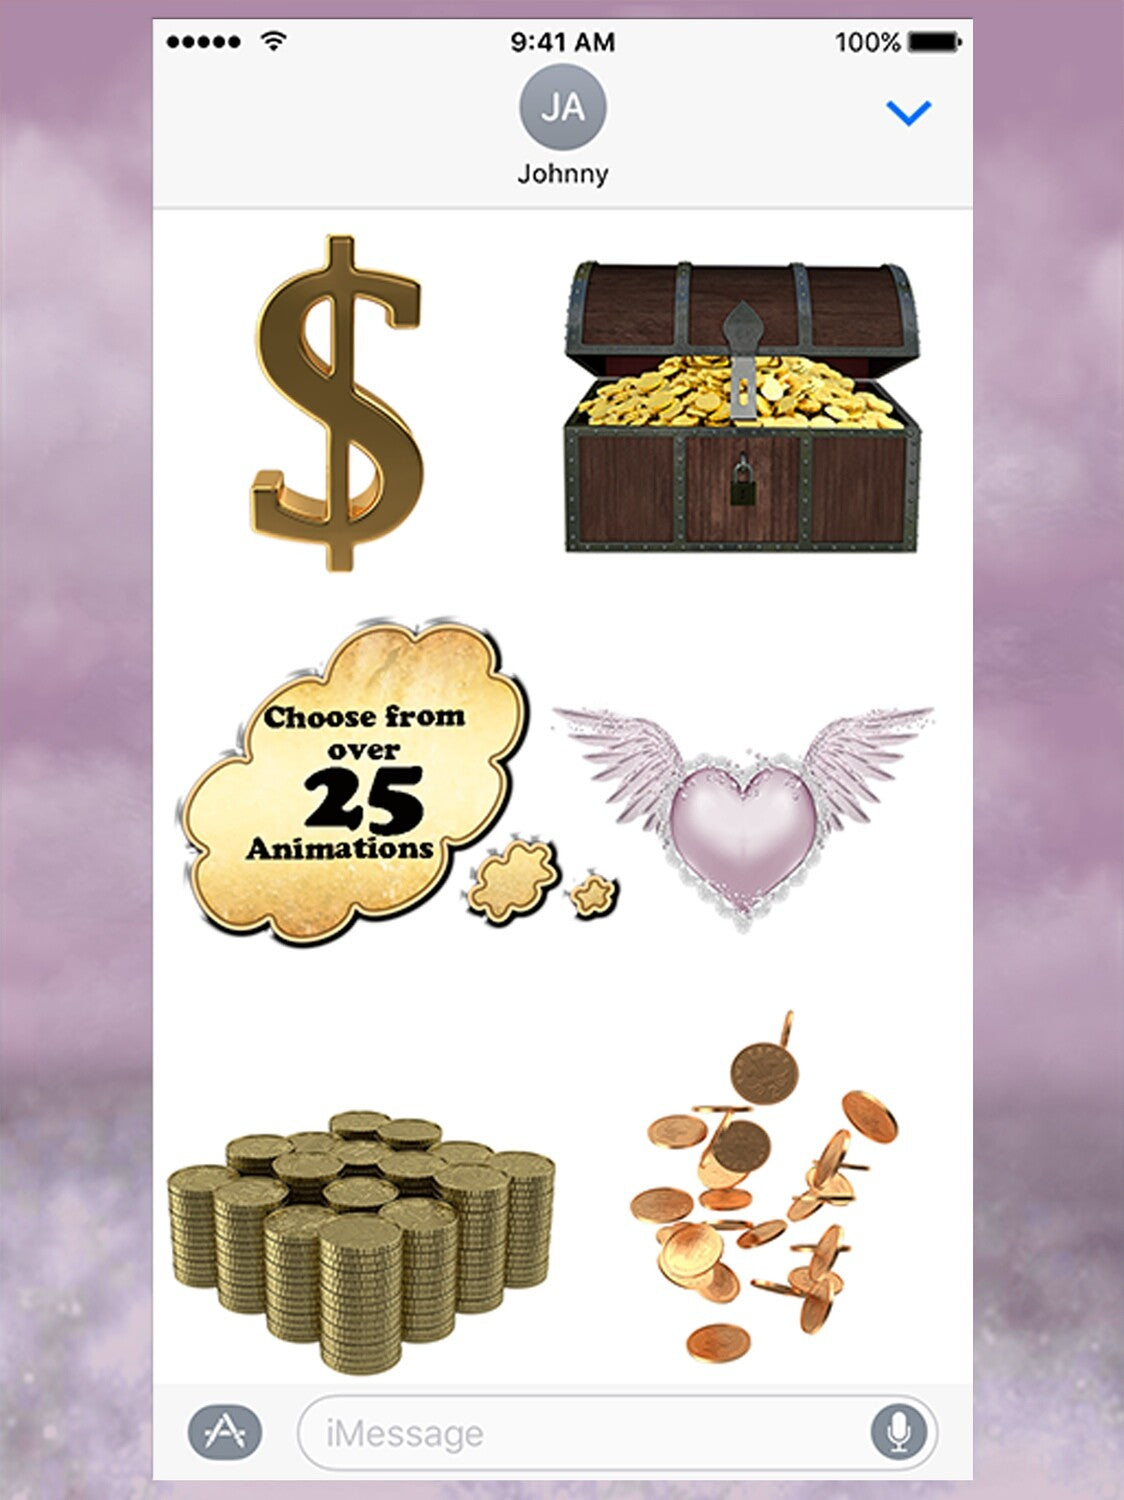 Sending You An Angel For Prosperity: iMessage Sticker Pack